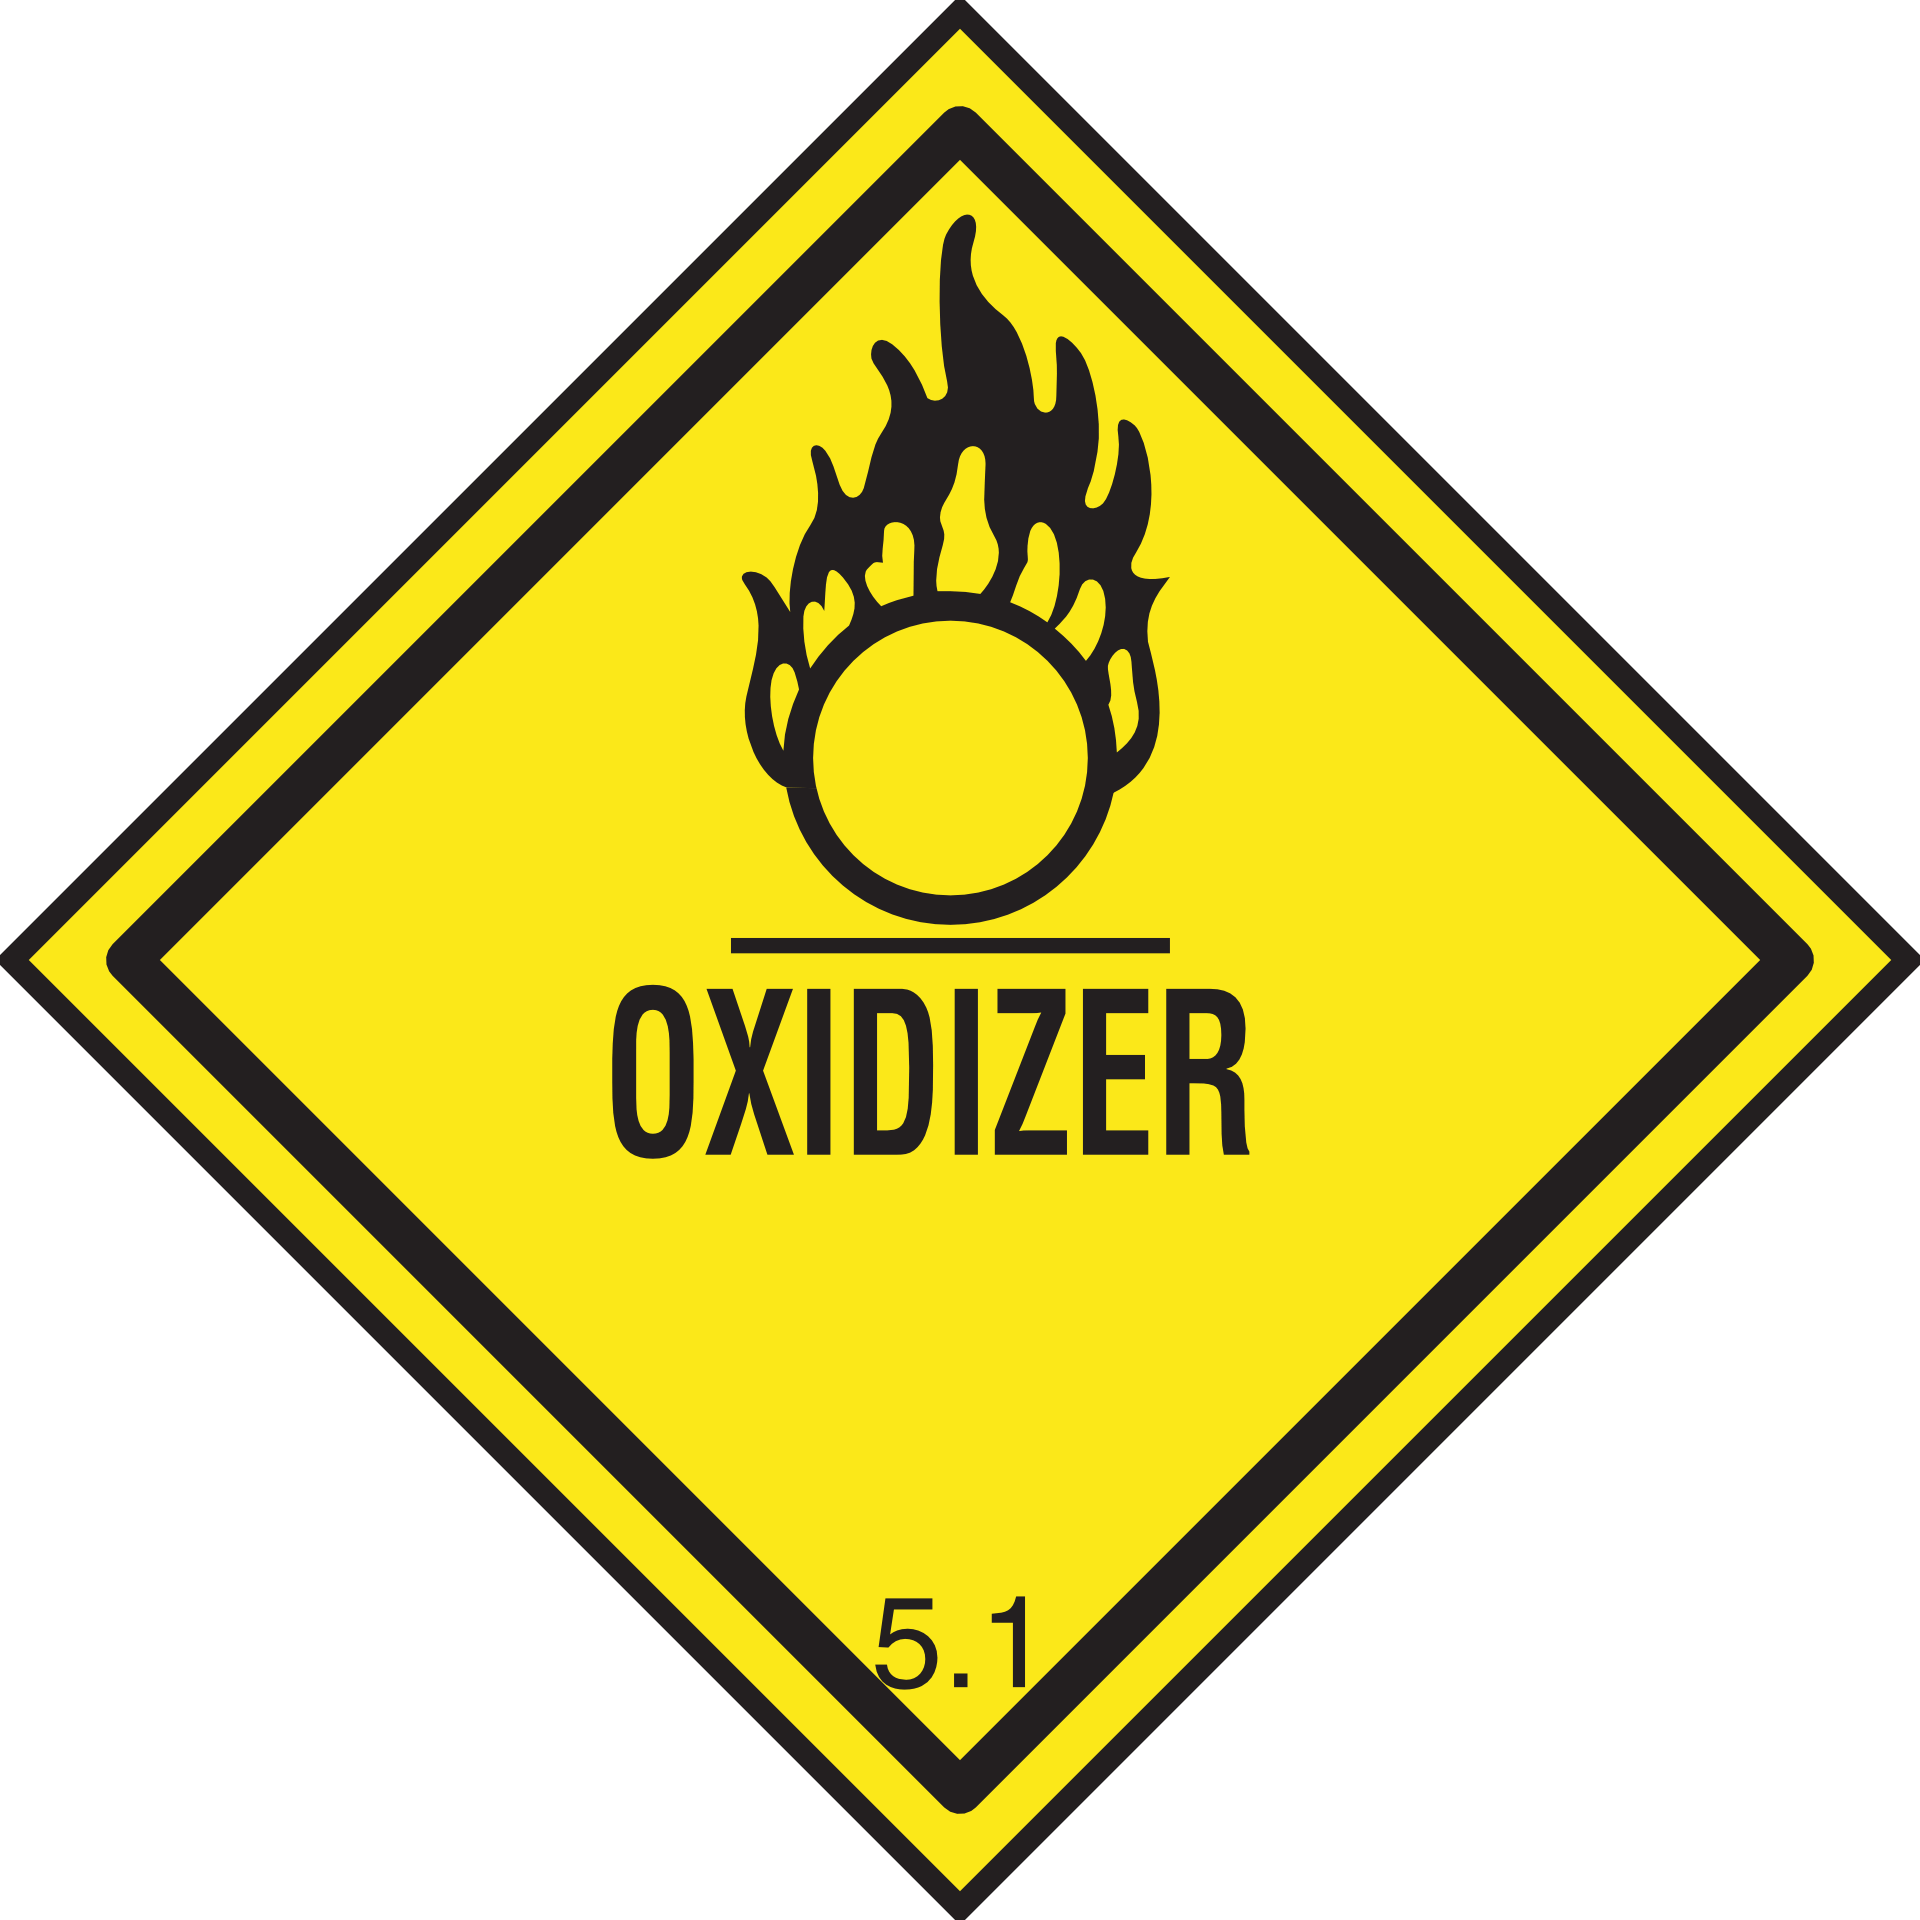 Oxidizer furnace warning label